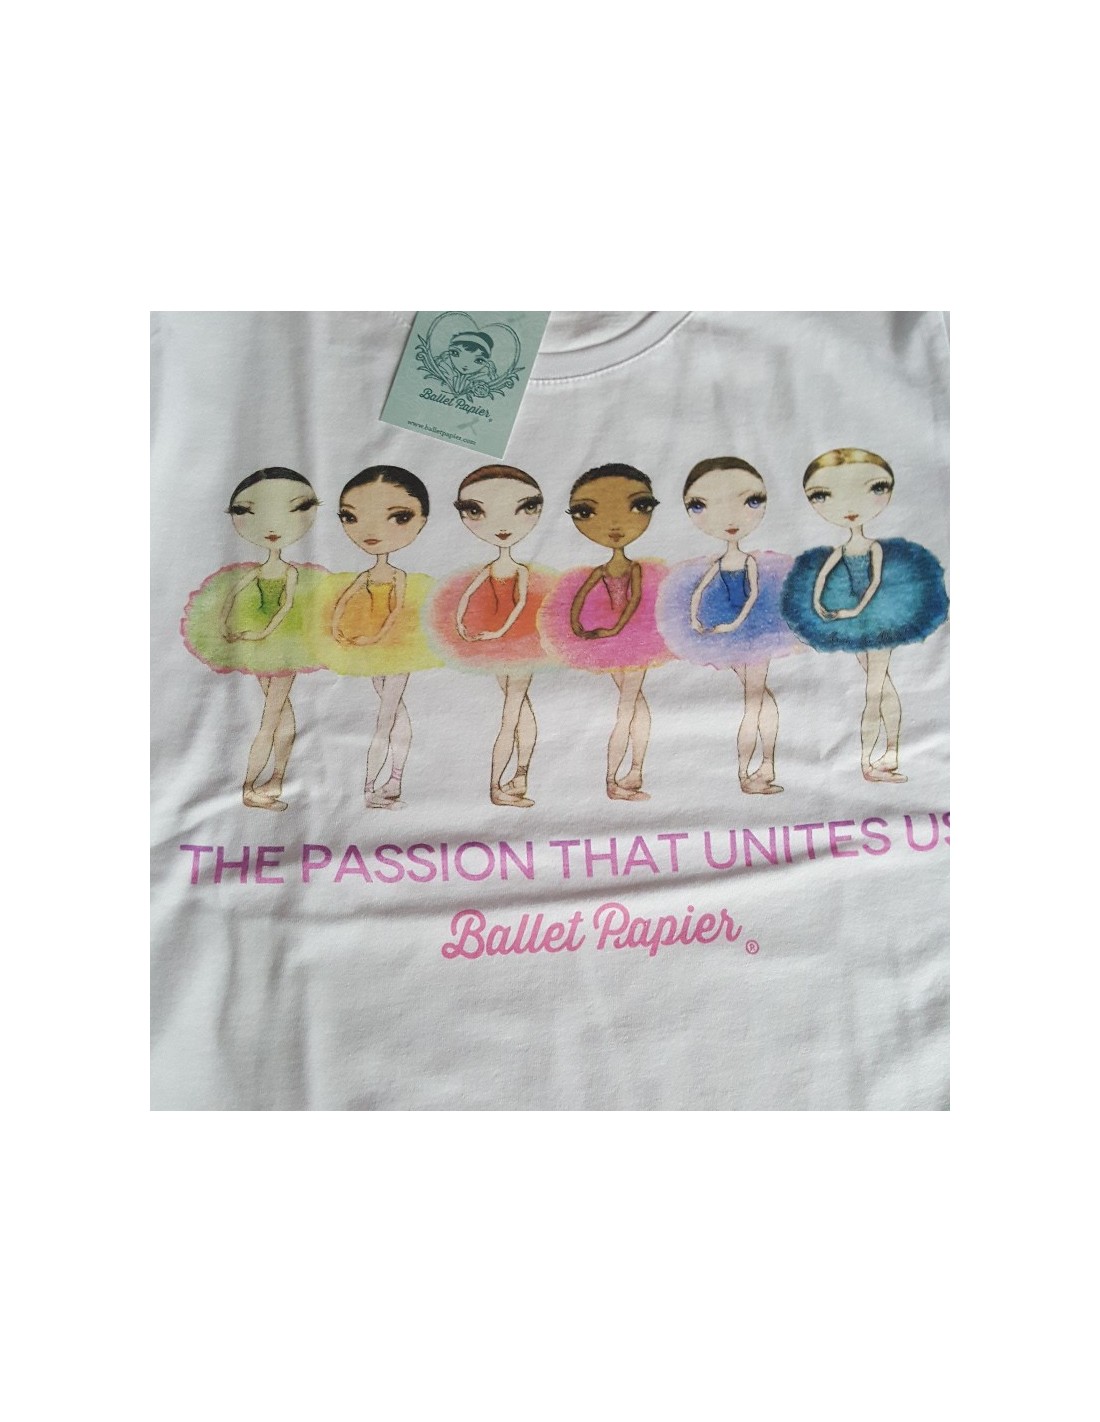 The Passion that Unites Us!' T-shirt by Ballet Papier brand.